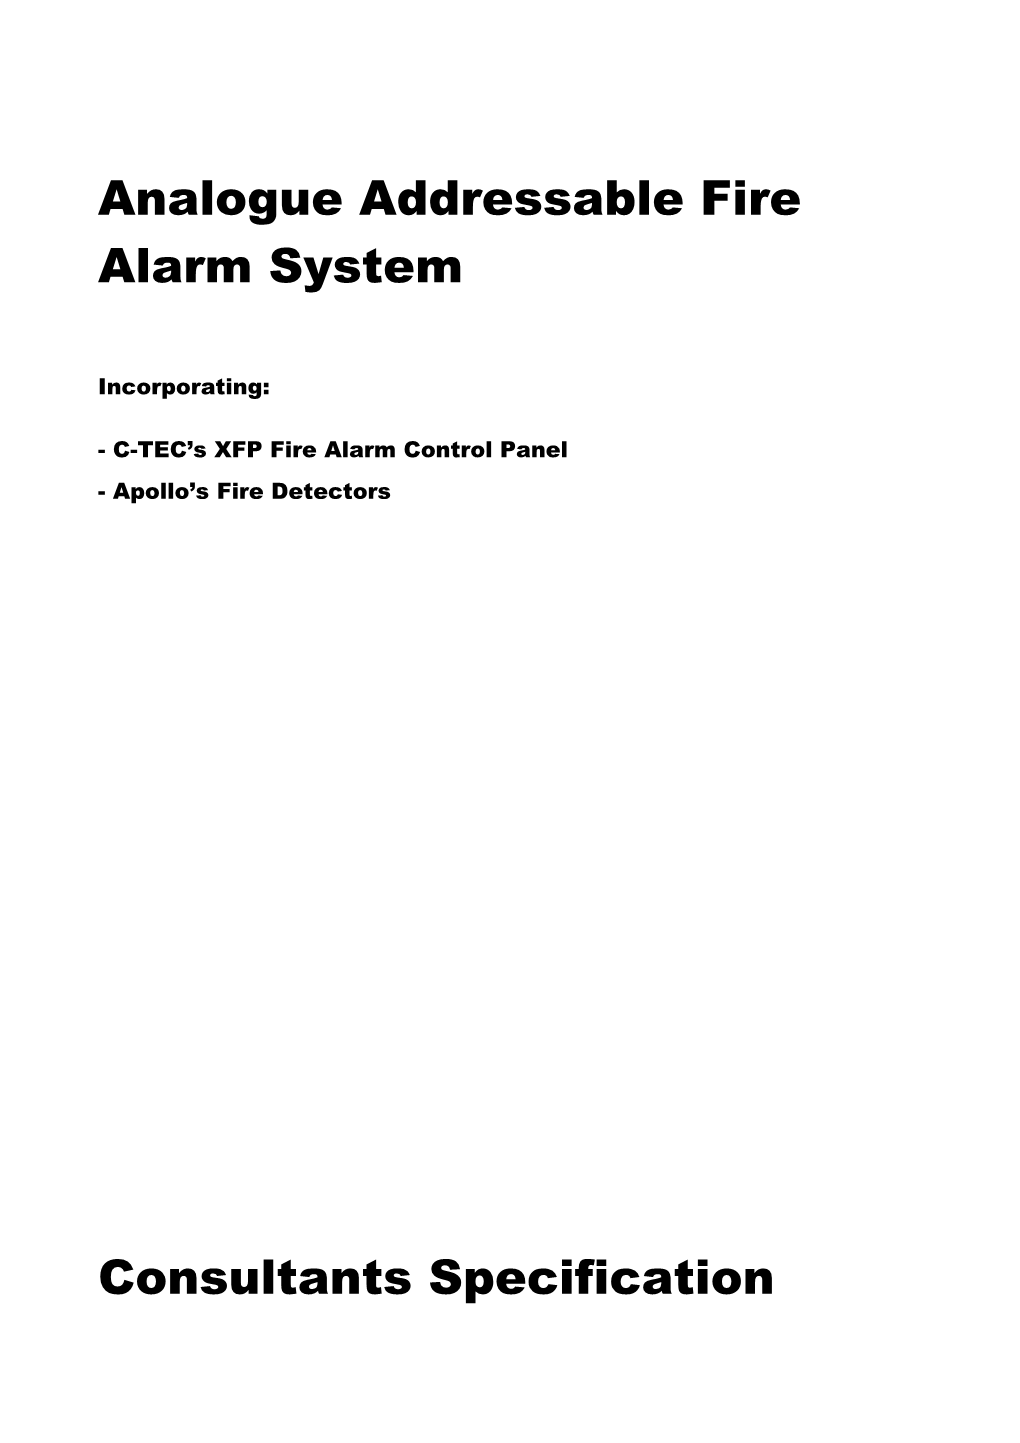 Analogue Addressable Fire Alarm System